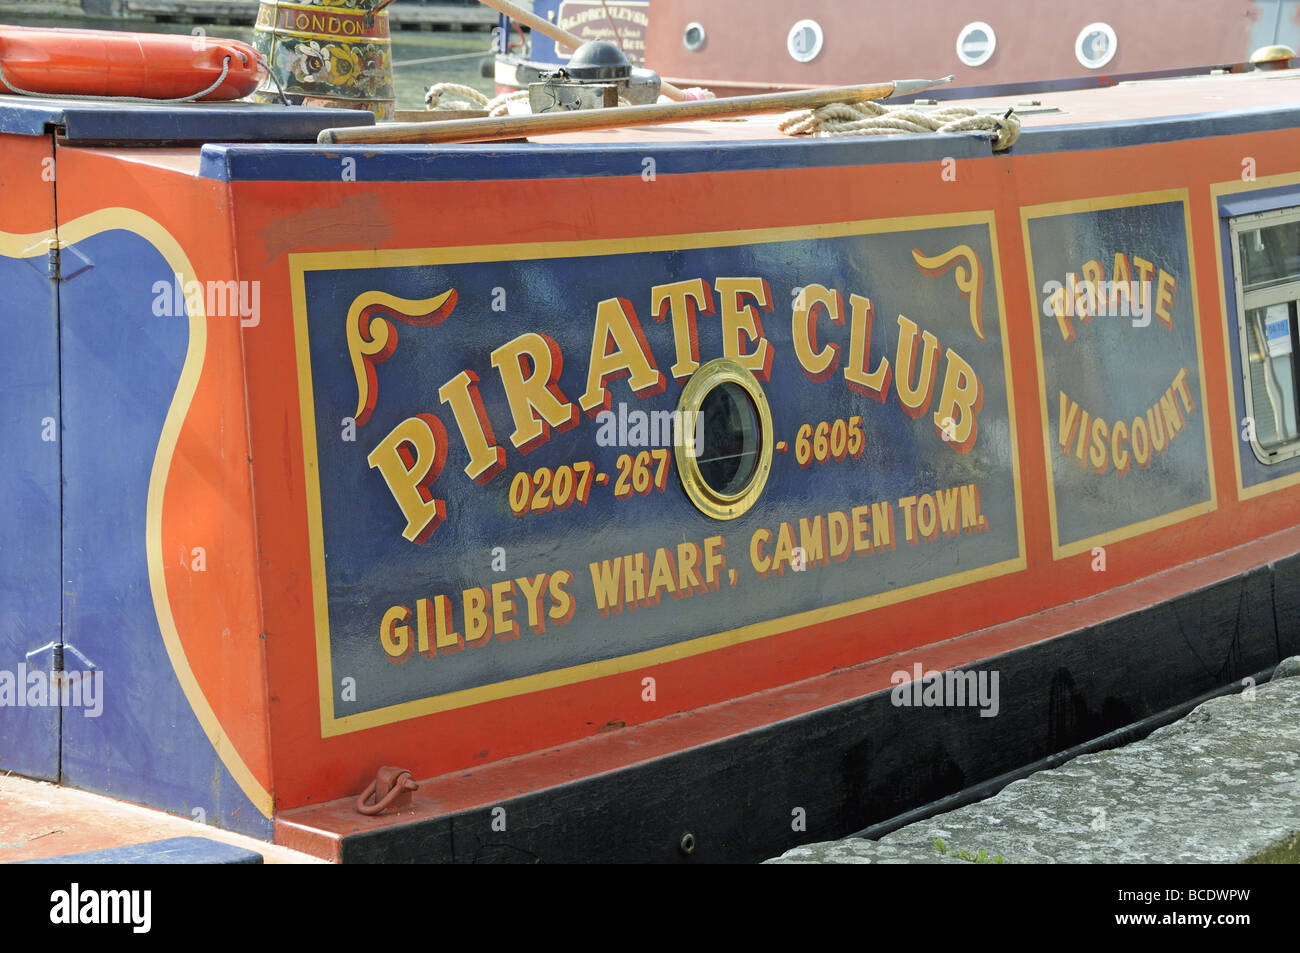 Piraten Club Kanal Boot Battlebridge Becken Regents Canal Islington London England UK Stockfoto